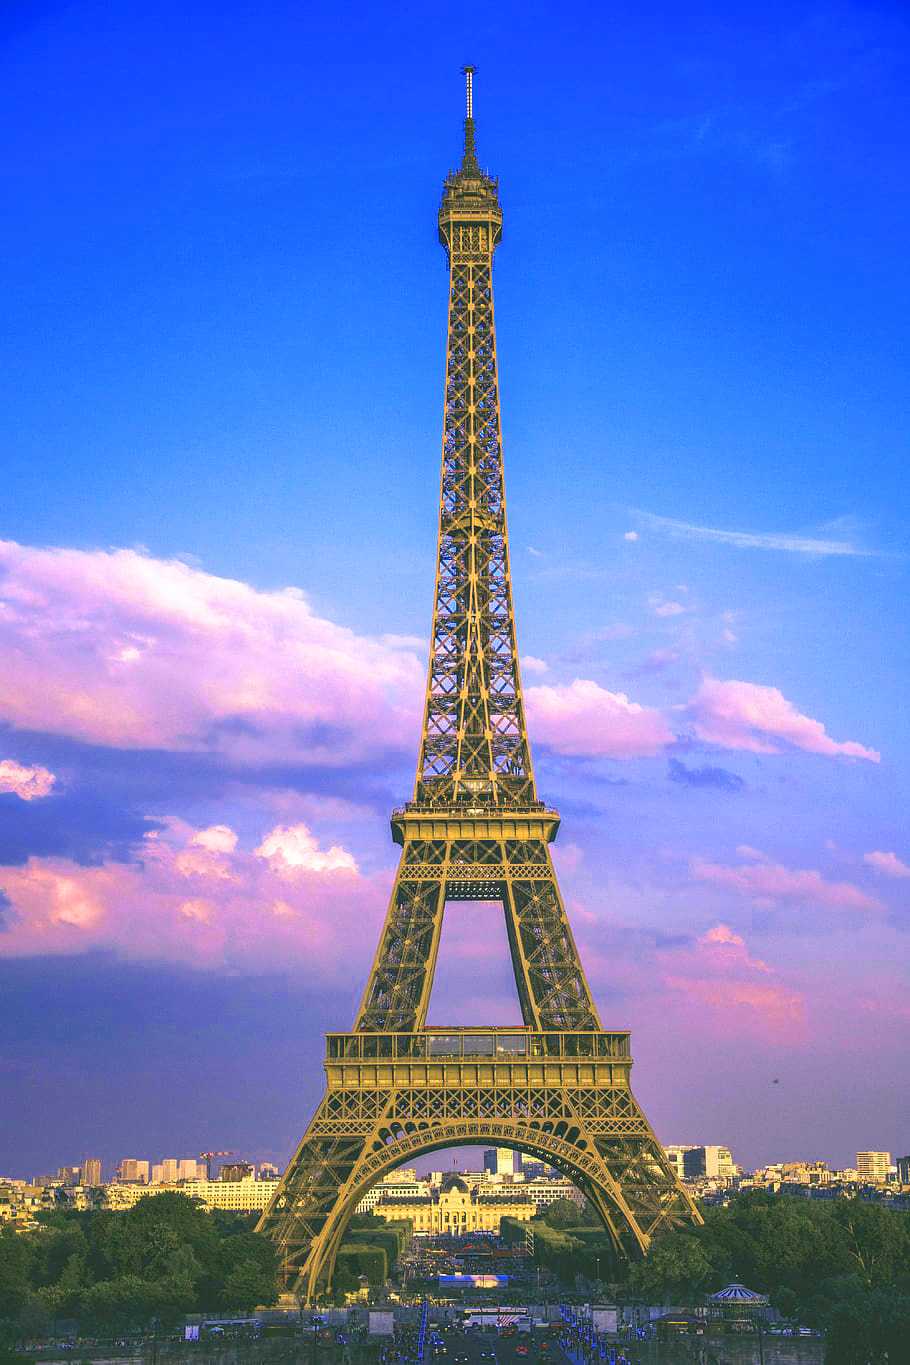 Eiffel Tower Wallpaper Whatspaper